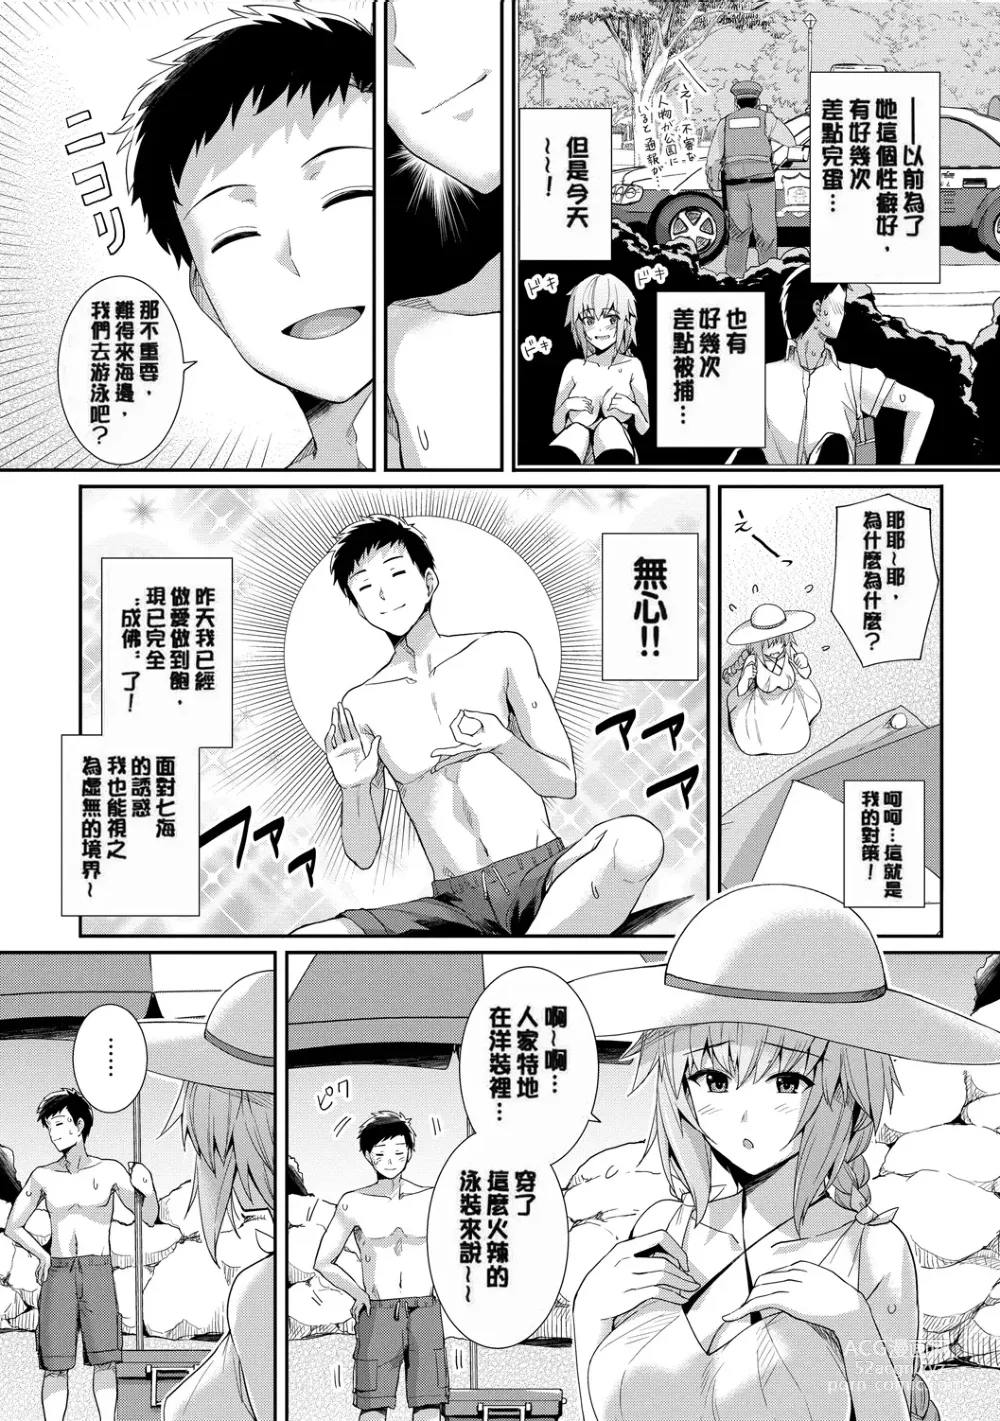 Page 8 of manga 甘色バニラ (uncensored)